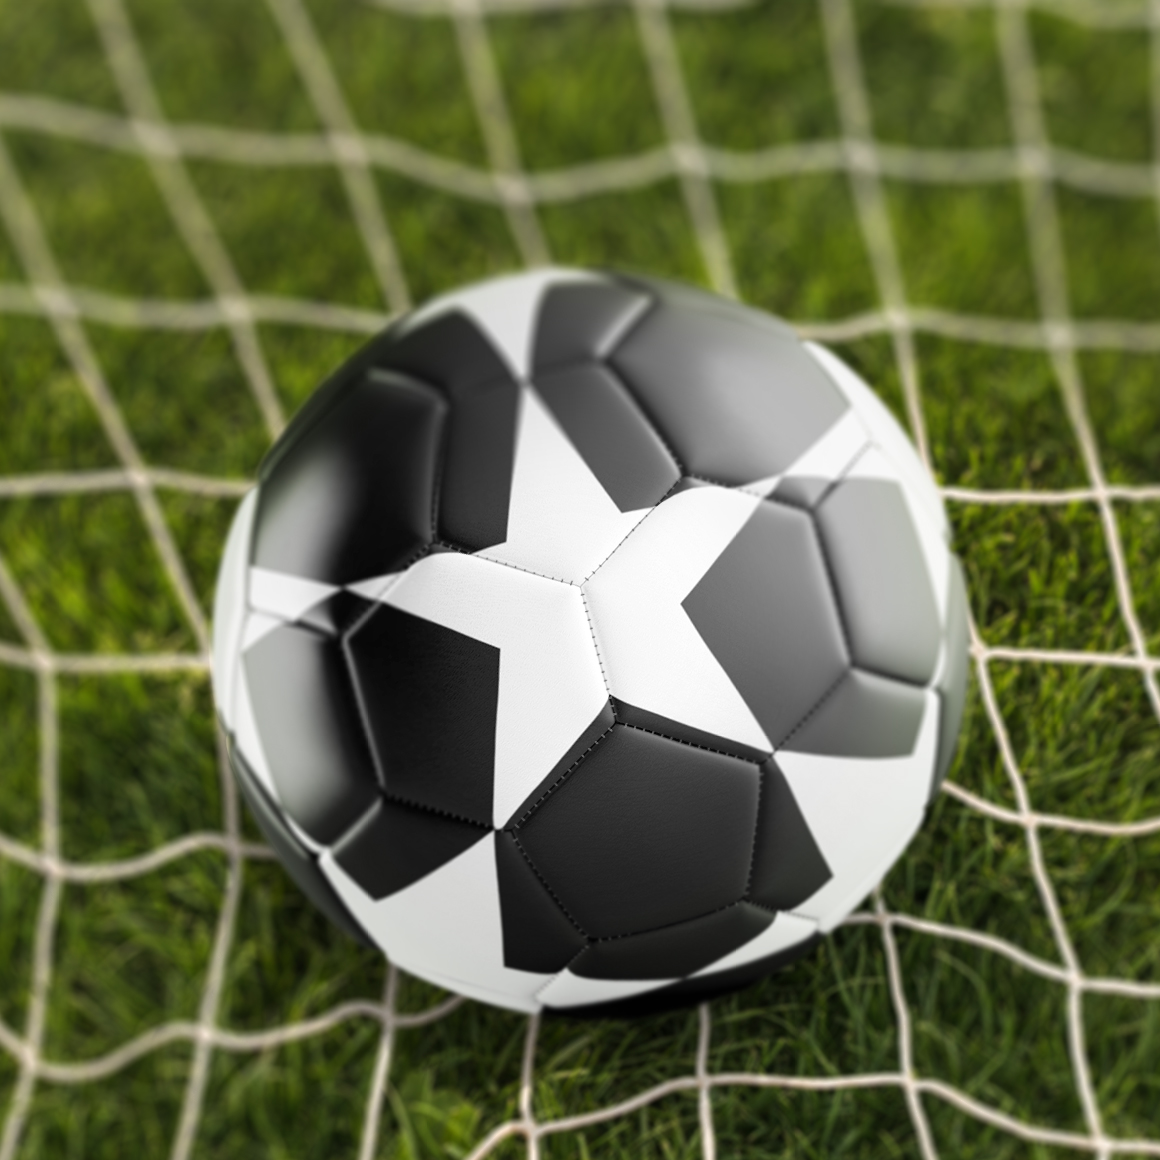 Download Soccer Ball Animated Mockup